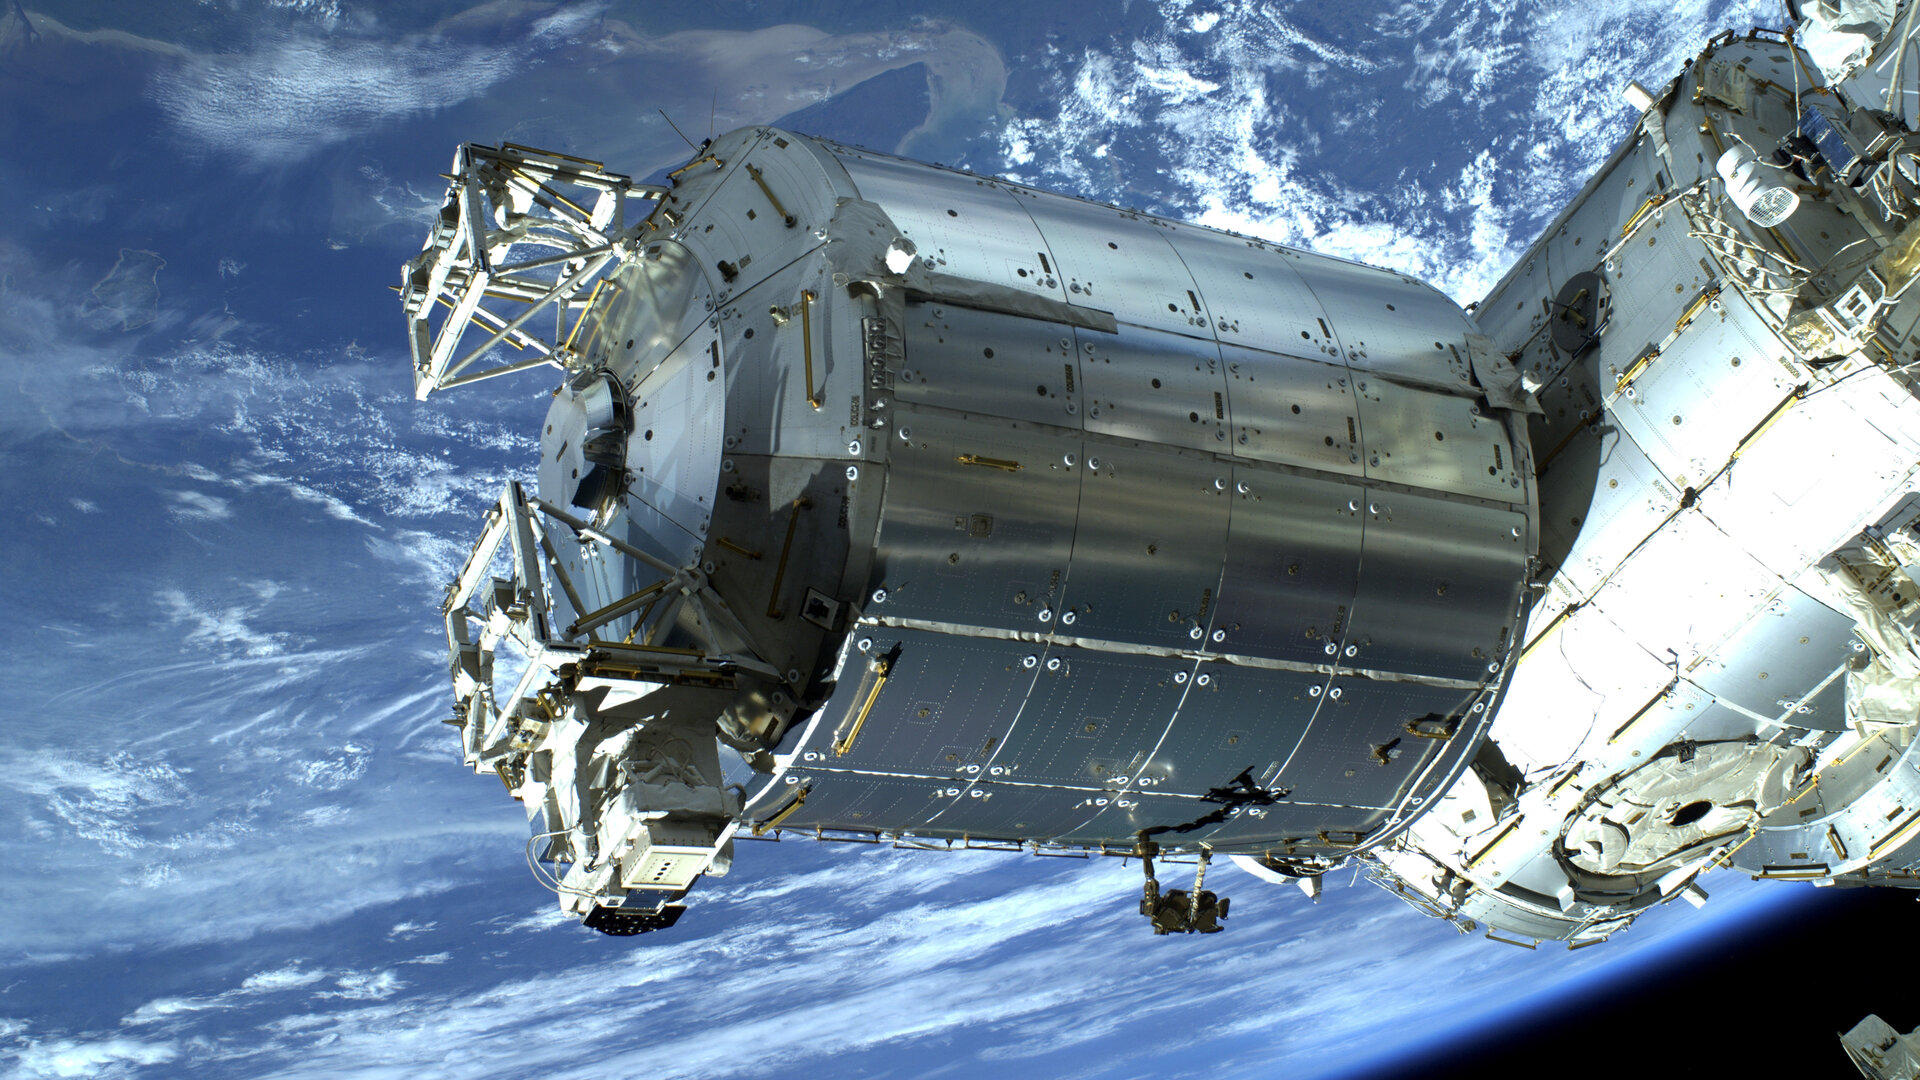 Europe's space laboratory Columbus